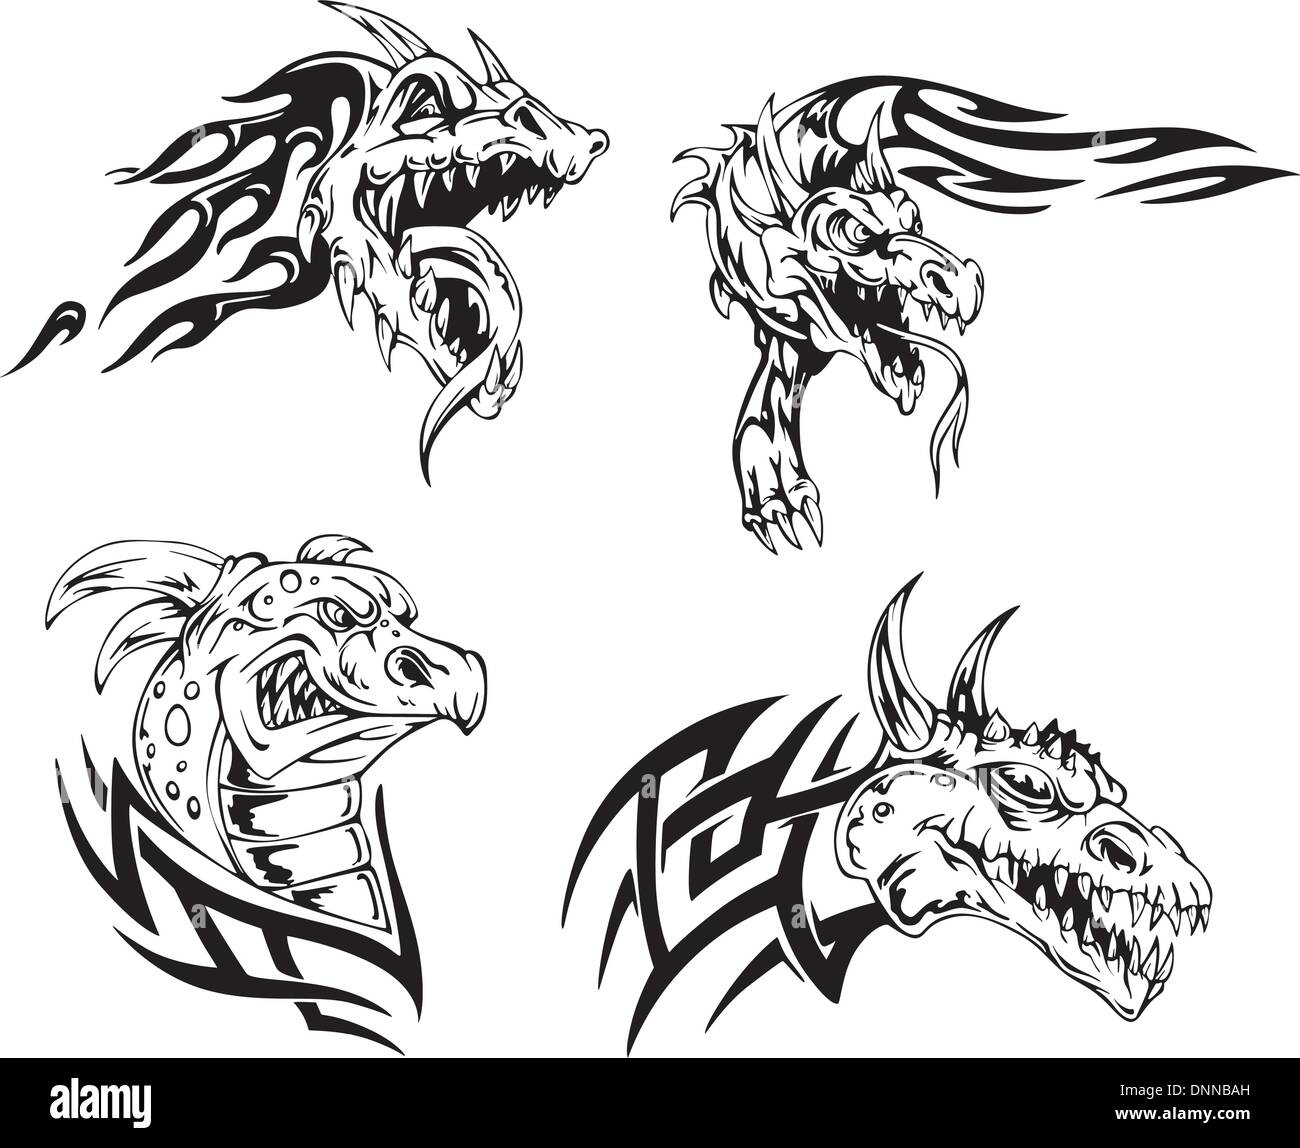 Dragon heads - tattoo designs. Set of vector illustrations. Stock Vector